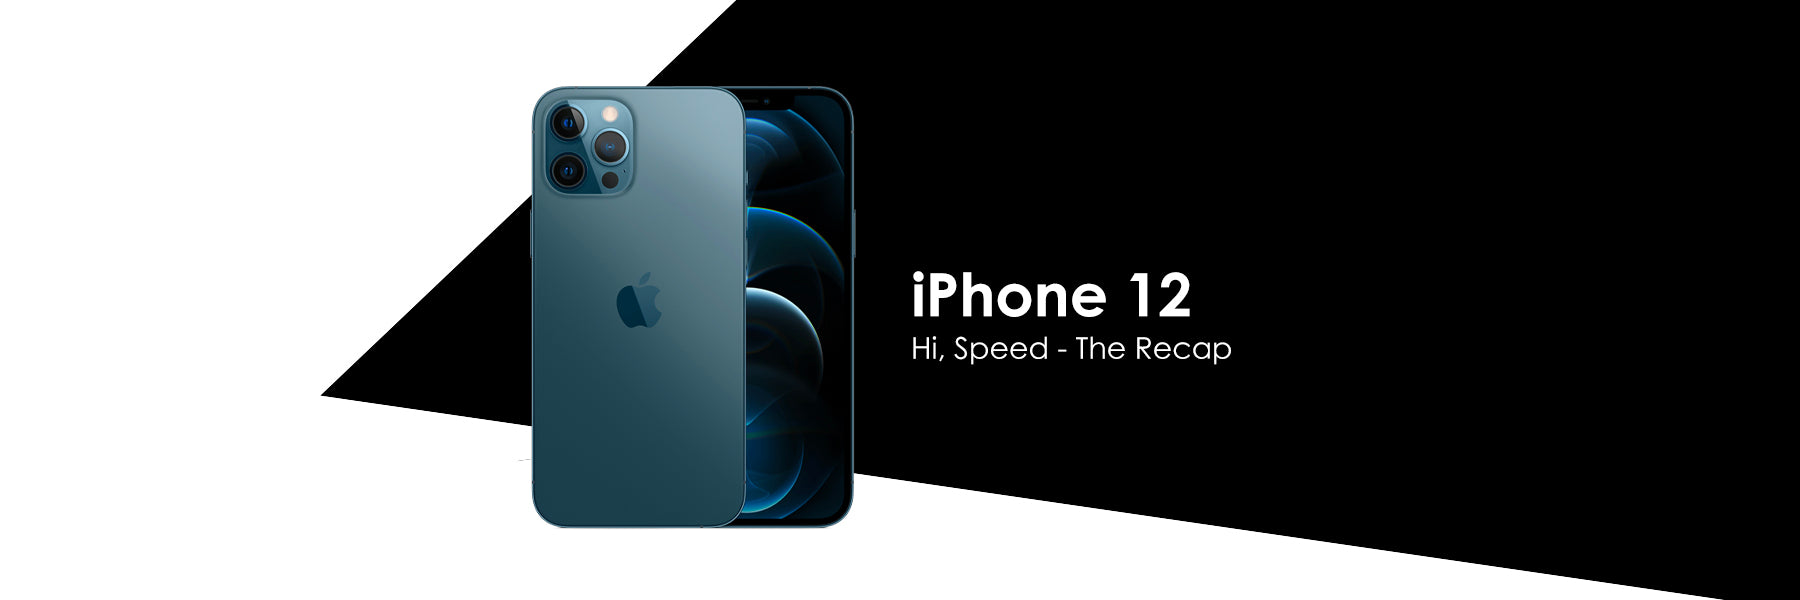 apple event 2020 october iPhone 12 hi speed